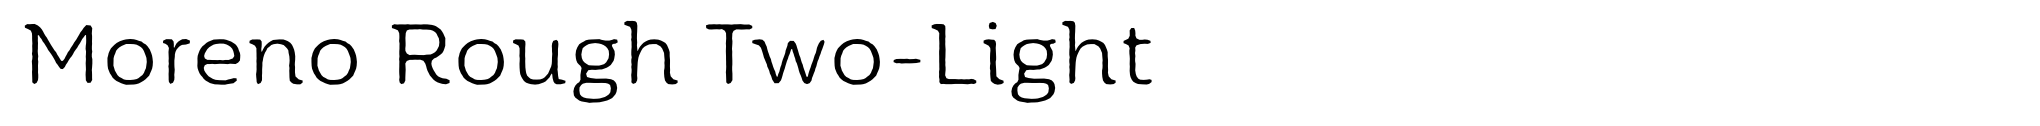 Moreno Rough Two-Light image